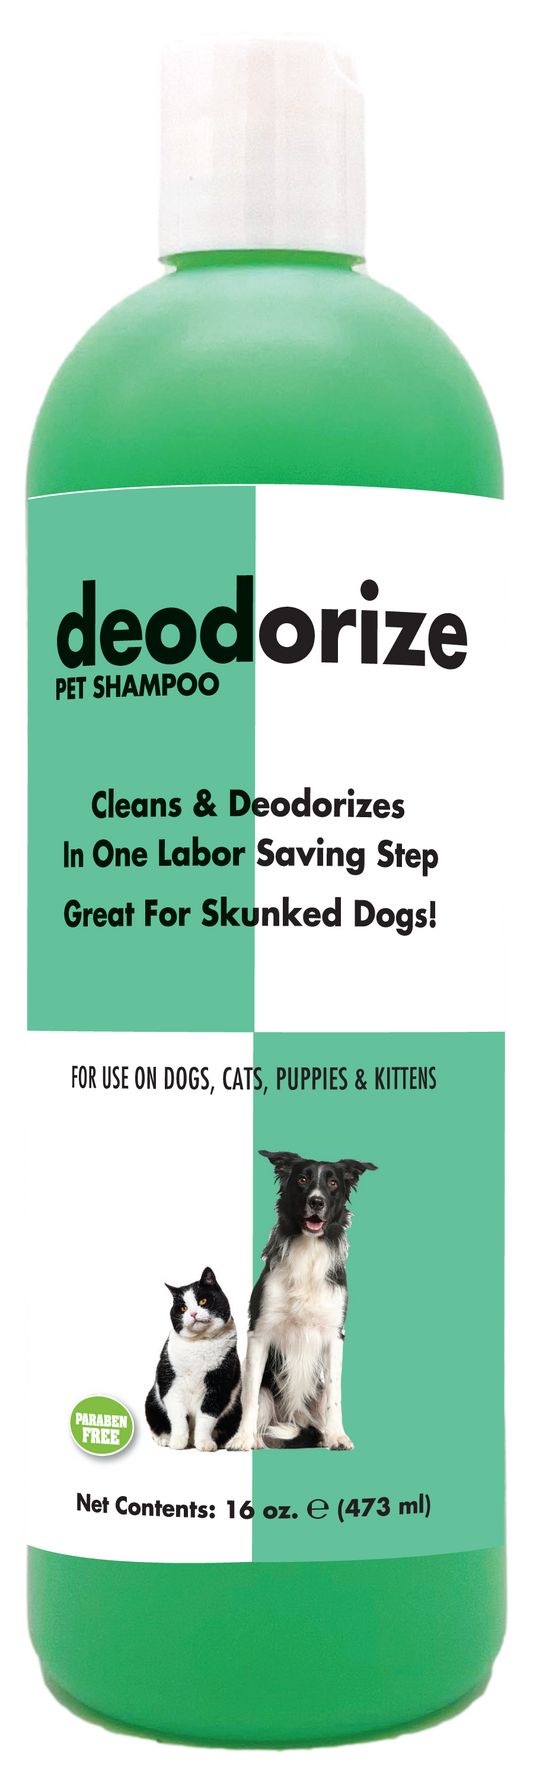 Deodorize Pet Shampoo | Showseason®